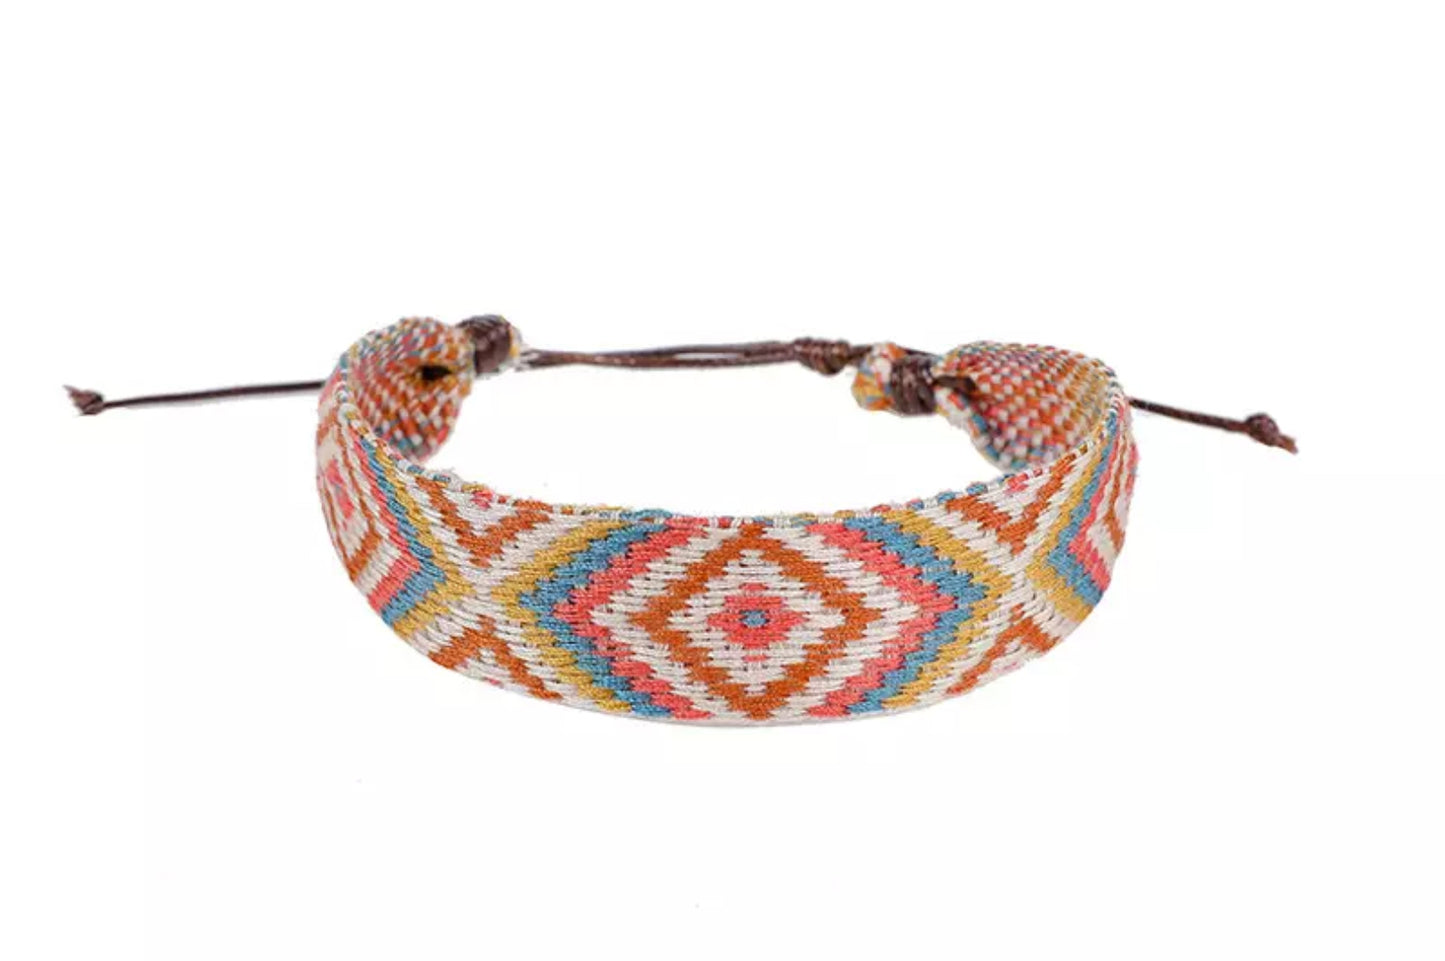 Aztec-Bohemian Embroidery Handmade Lavender, Letter Woven Tassel, Adjustable Rope Braided FashionBracelet